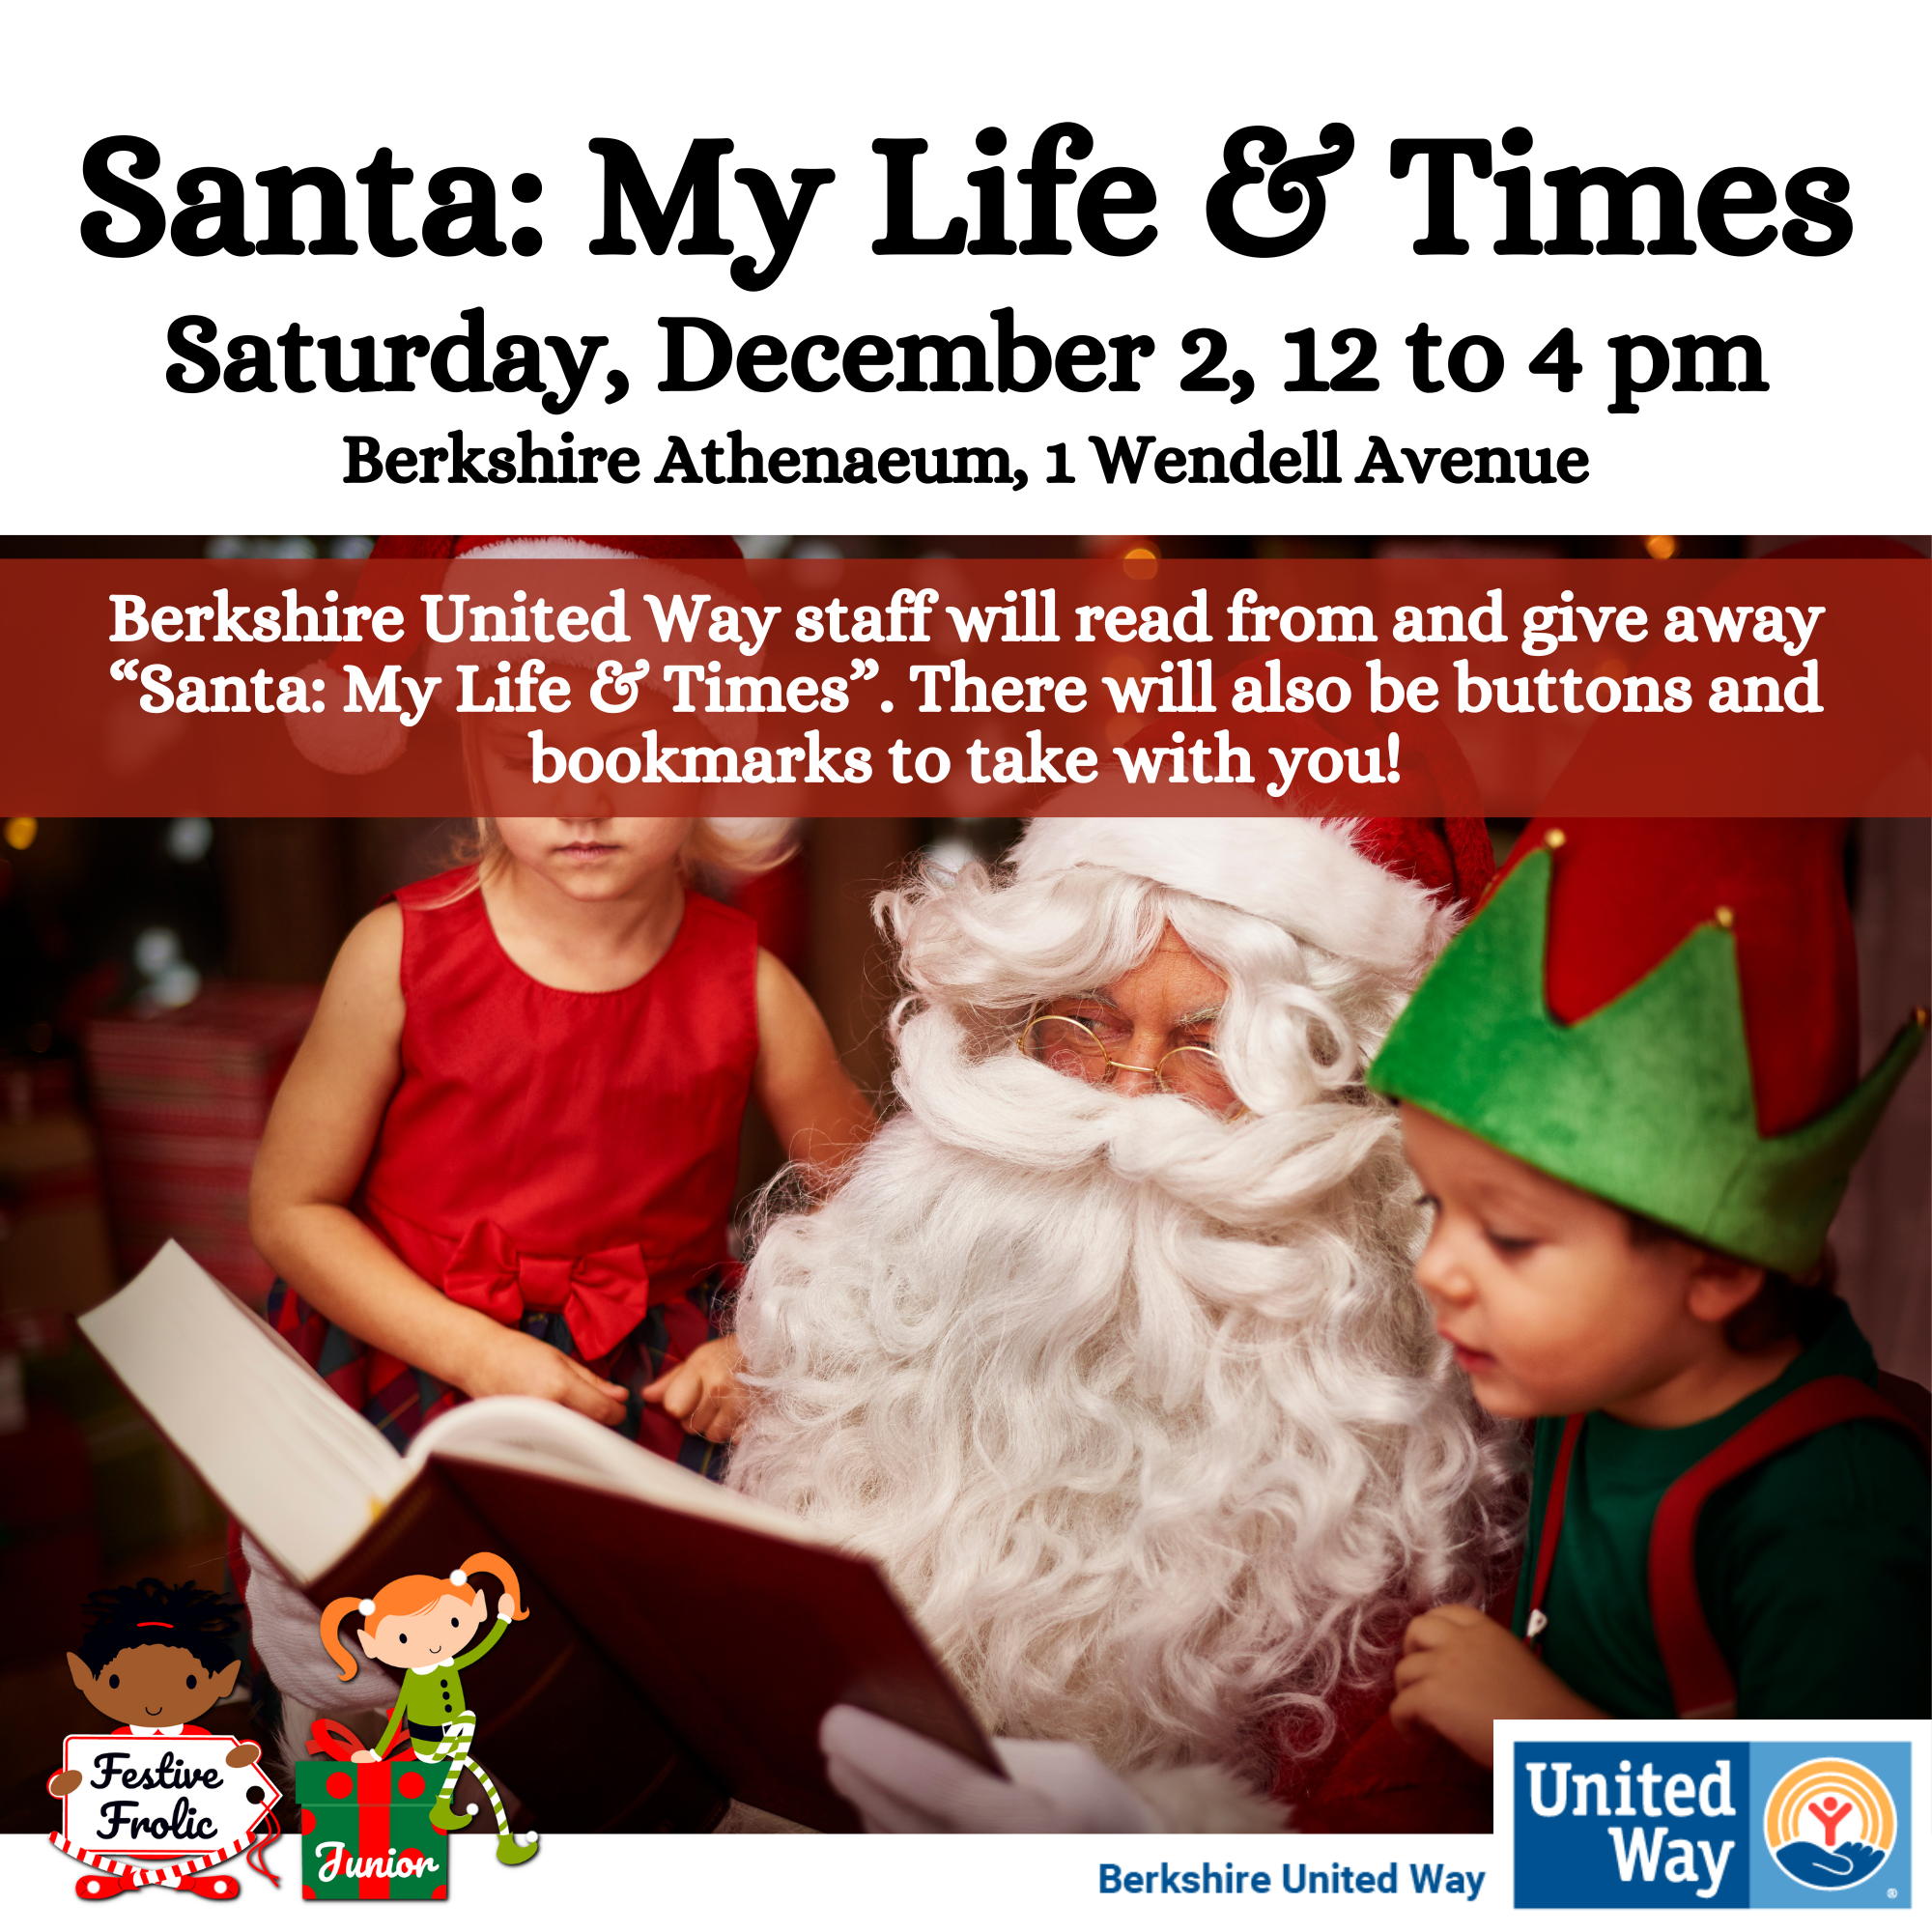 “Santa: My Life & Times” Reading and Giveaway